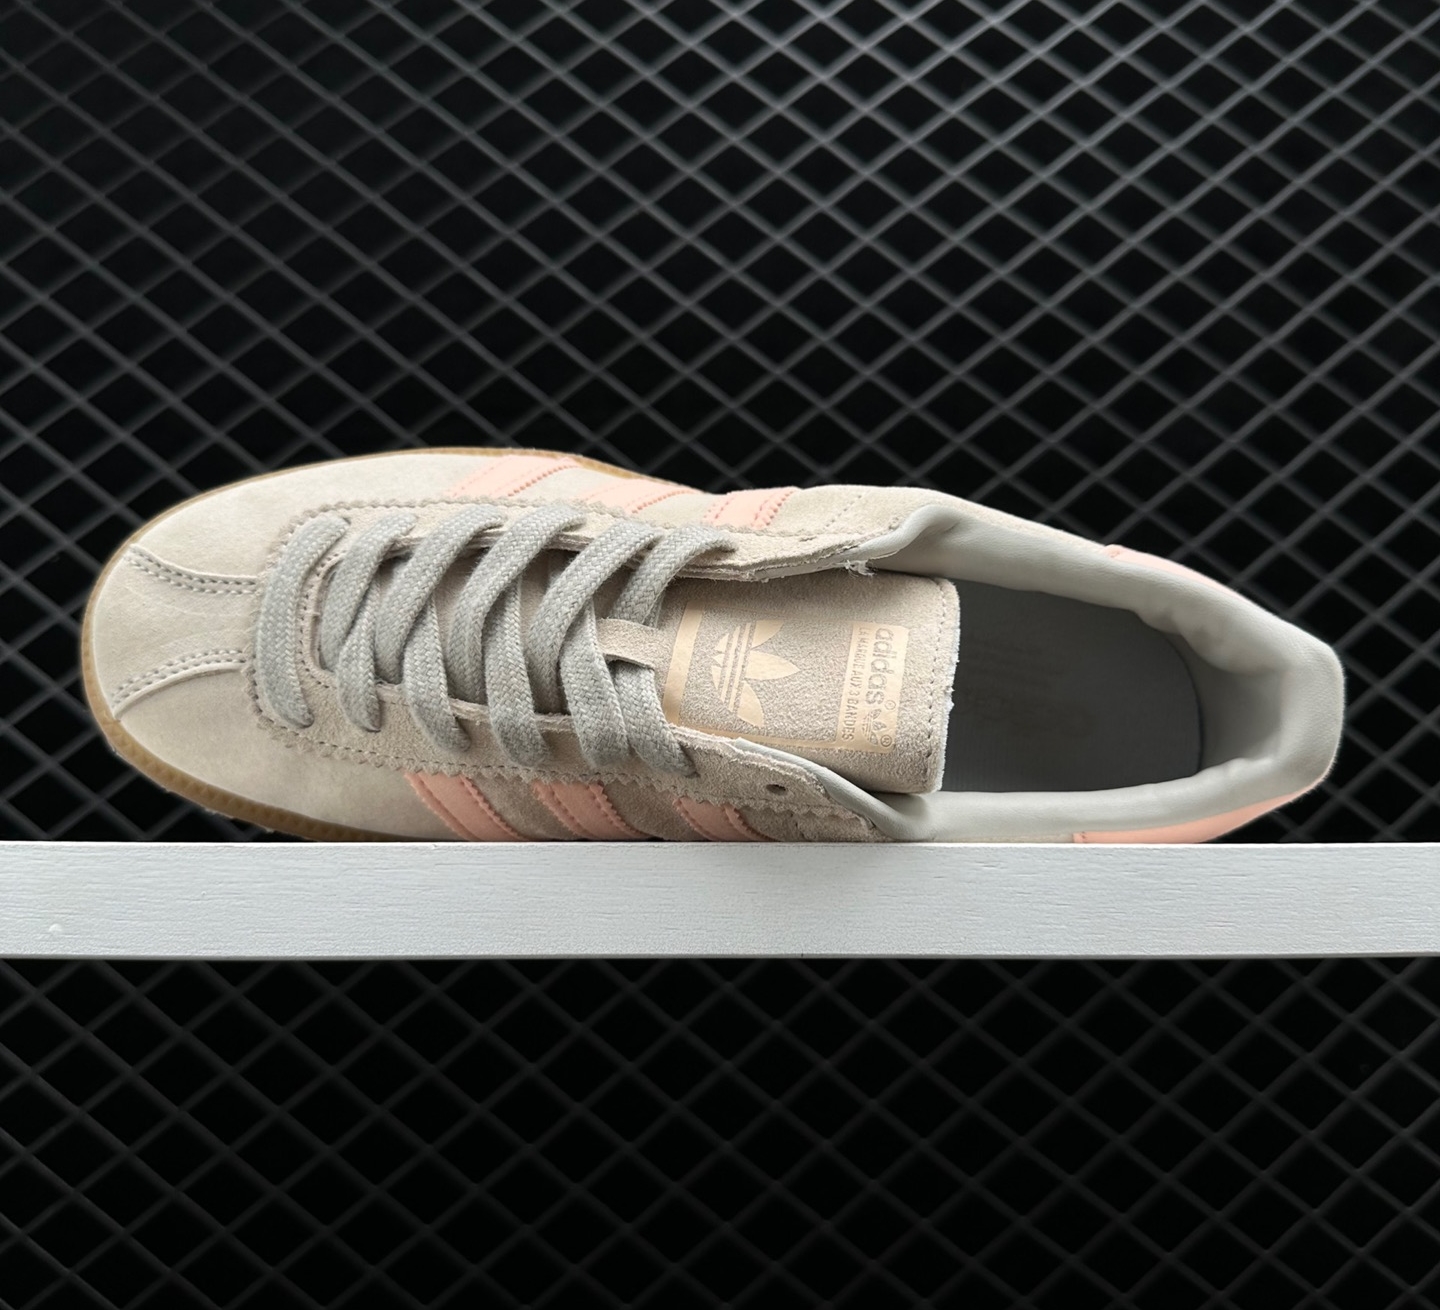 Adidas Originals Bermuda 'Wonder White' GY7388 - Stylish Retro Sneakers